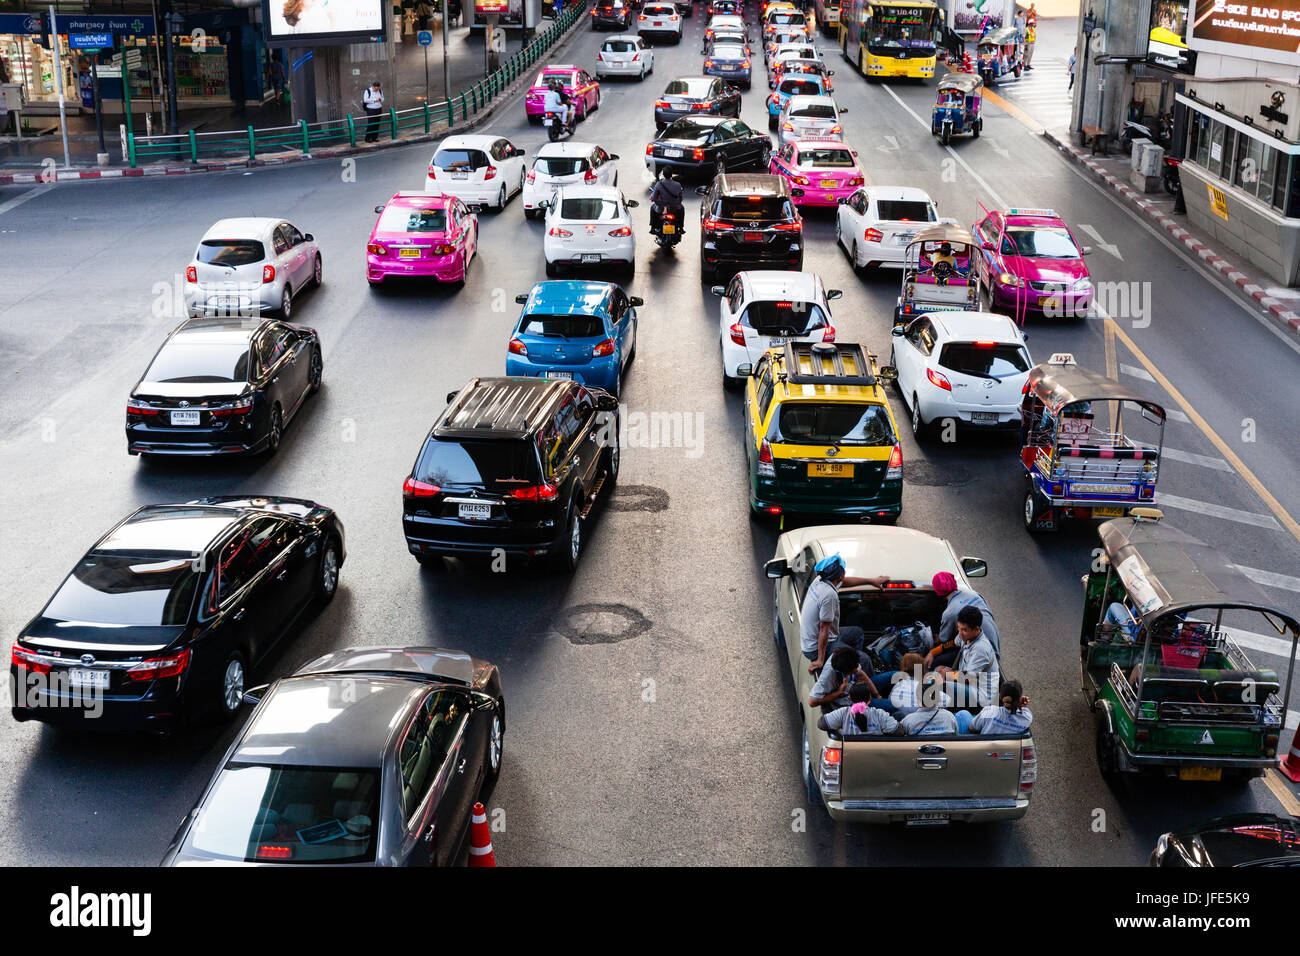 BANGKOK, THAILAND - APRIL 25: Traffic on the streets of Bangkok on April 25, 2016 in Bangkok, Thailand. Stock Photo